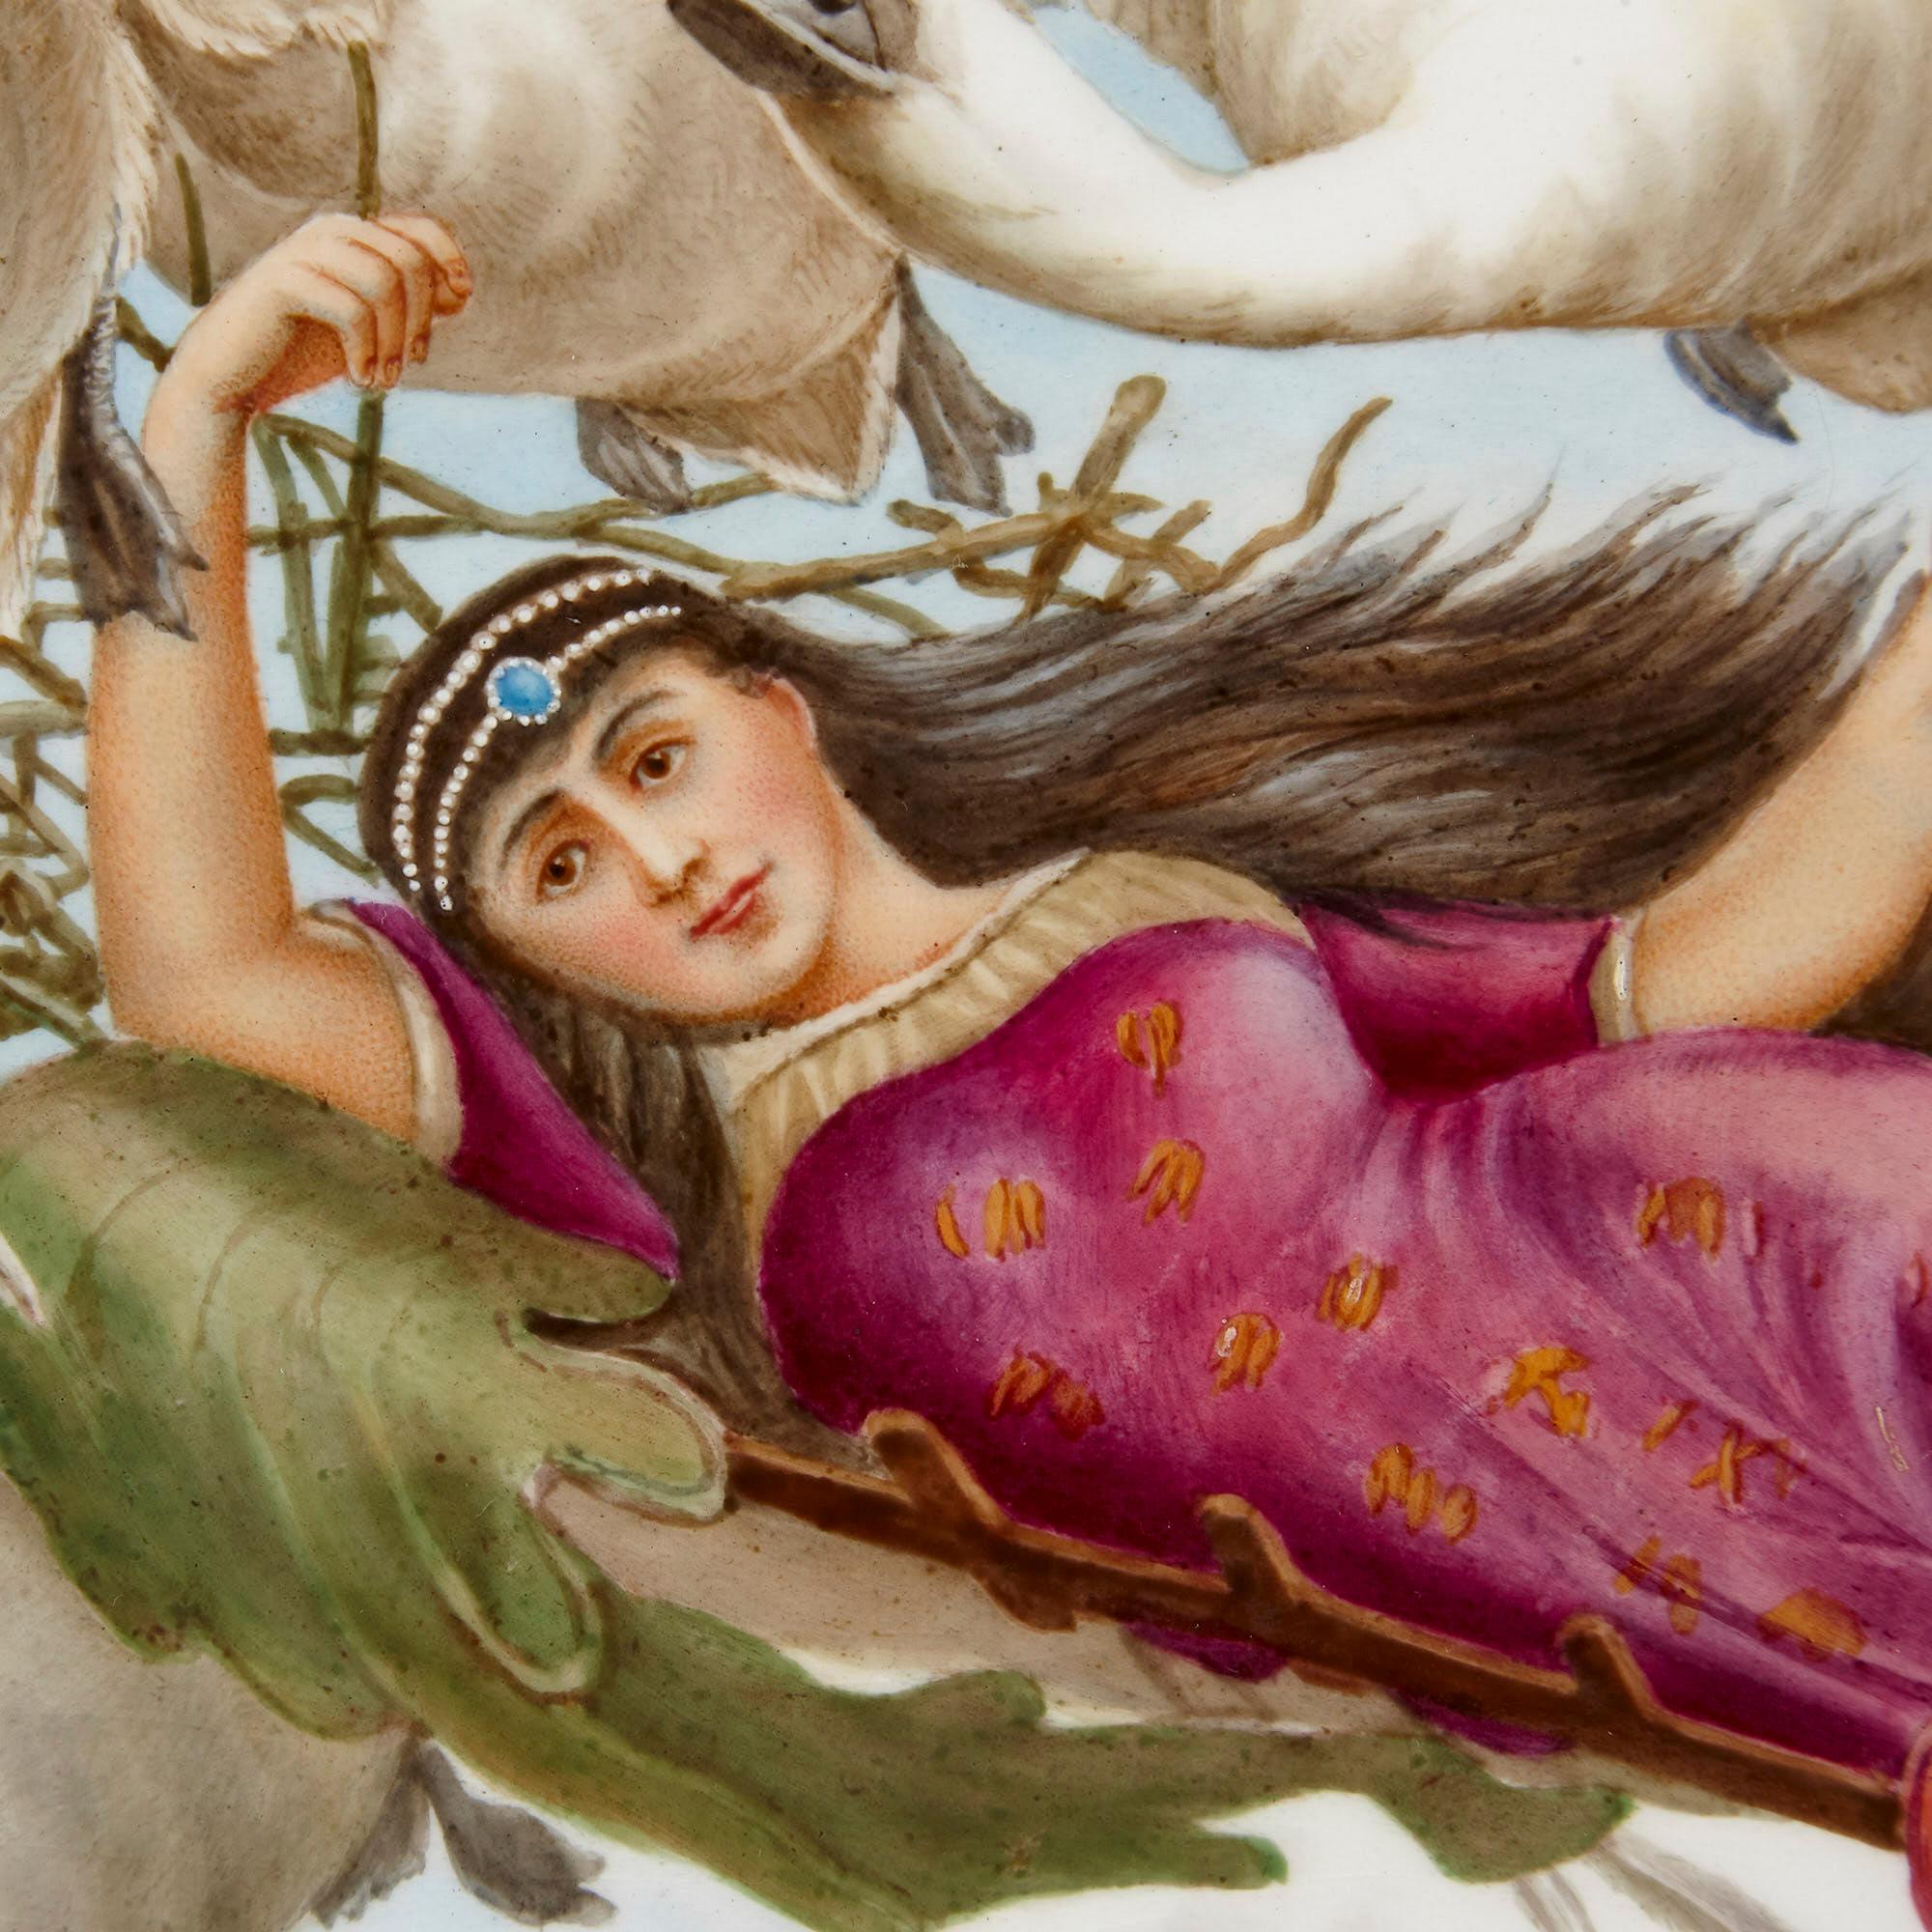 English Painted Porcelain Plaque of Woman Flown Aloft by Swans For Sale